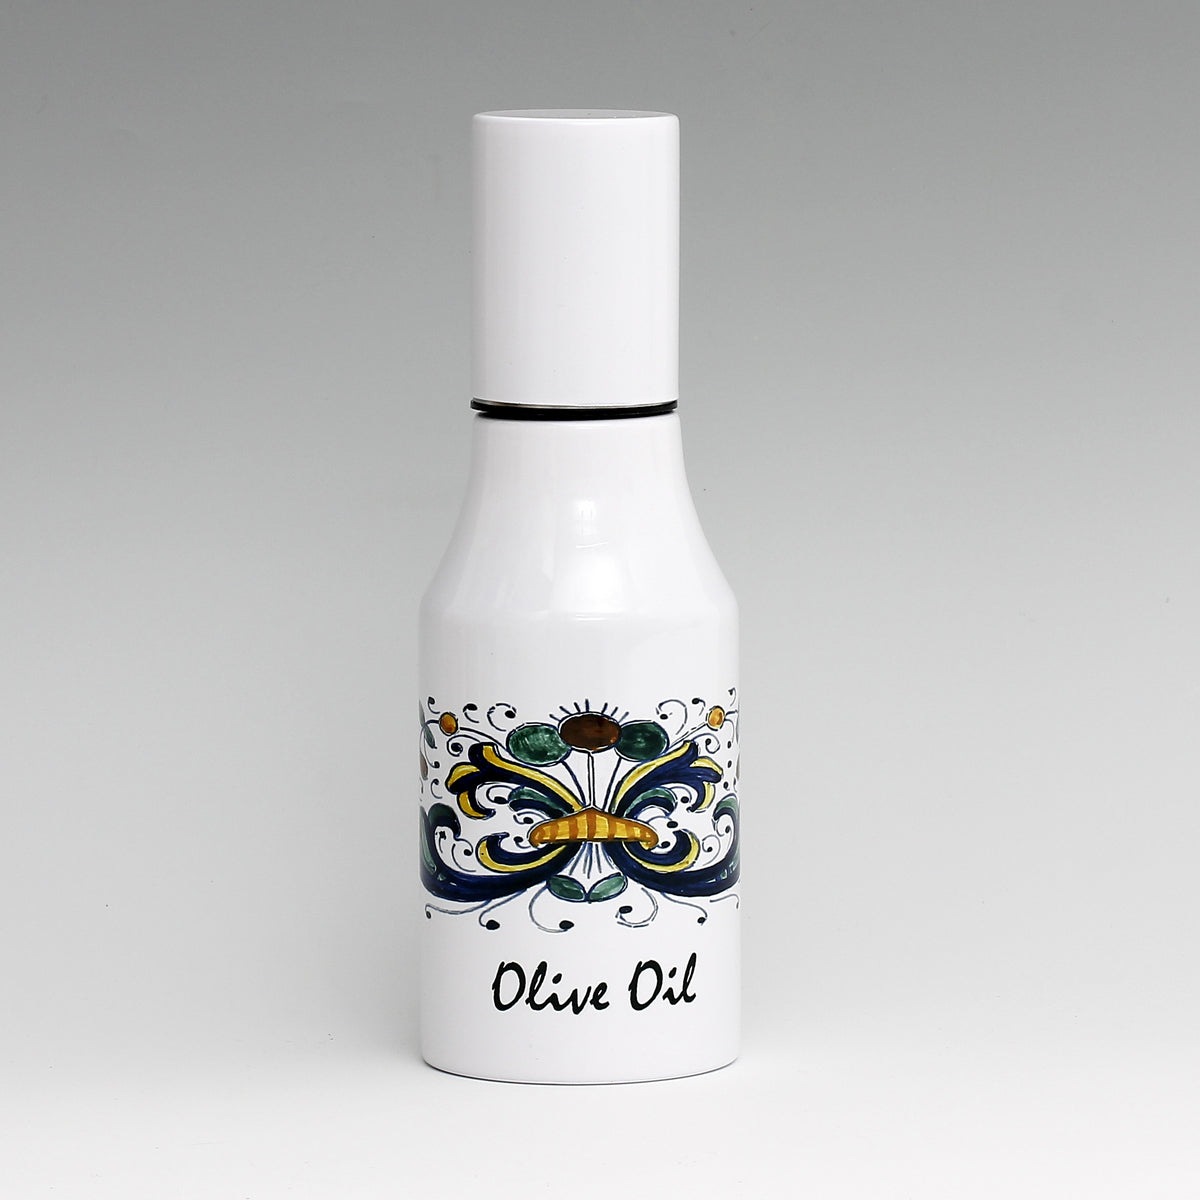 SUBLIMART: Olive Oil Dispenser with non-drip pourer and dust cover cap. (Deruta Design 01)